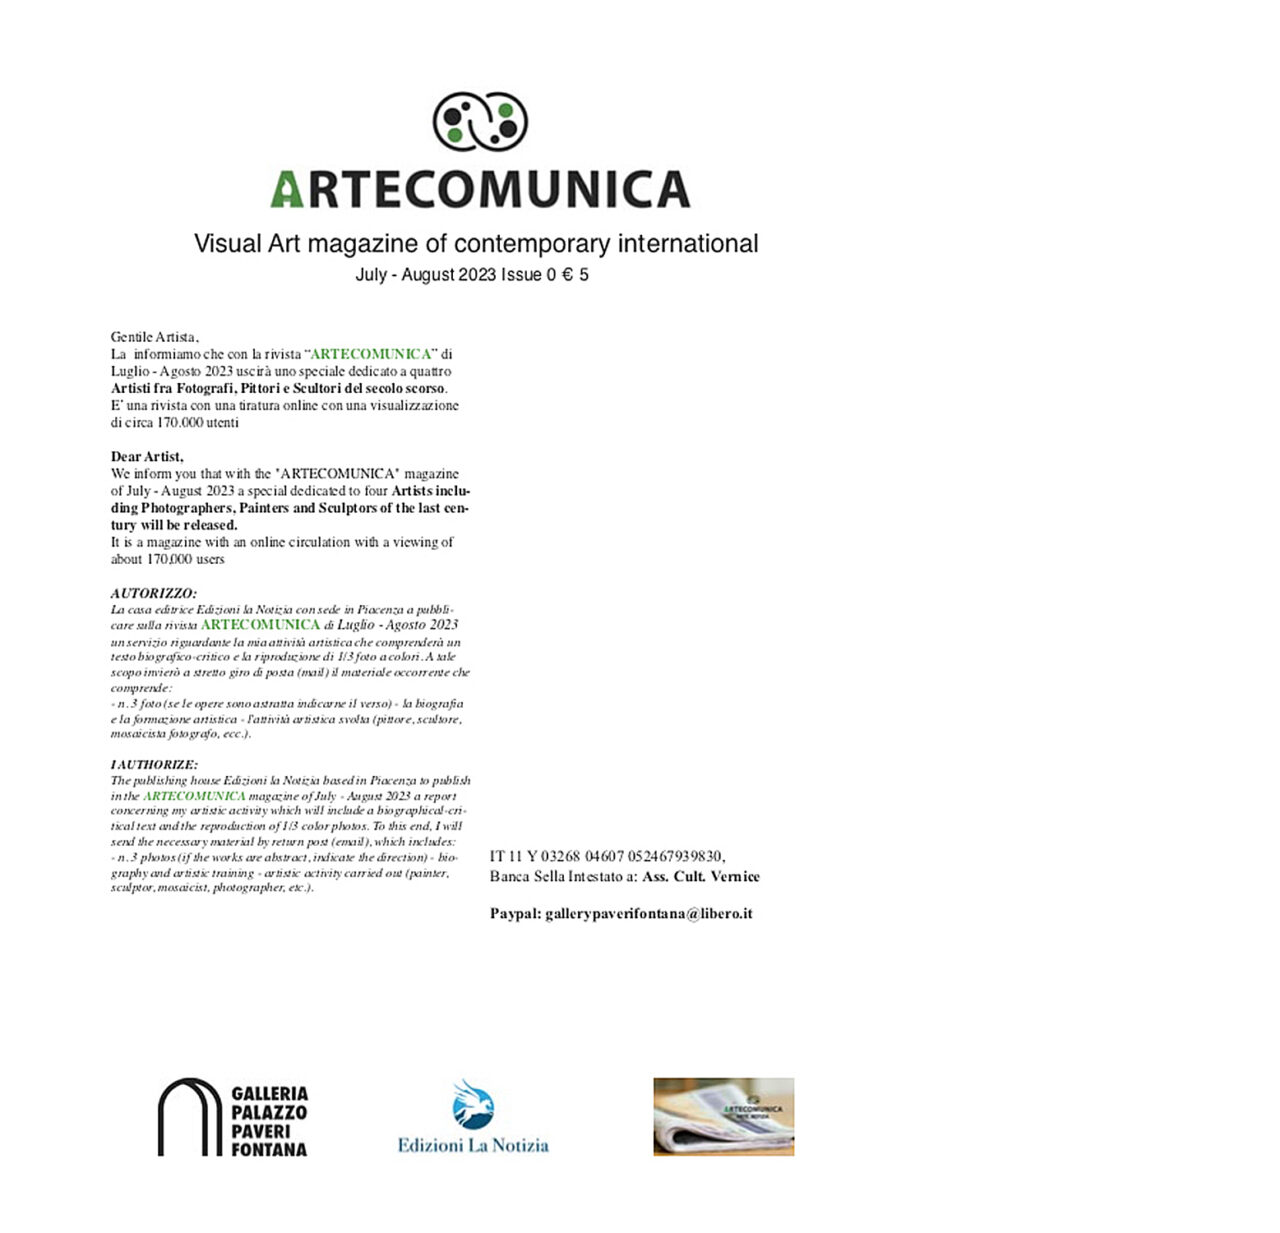 Artecomunica_Visual Art Magazine of Contemporary International July-August 2023